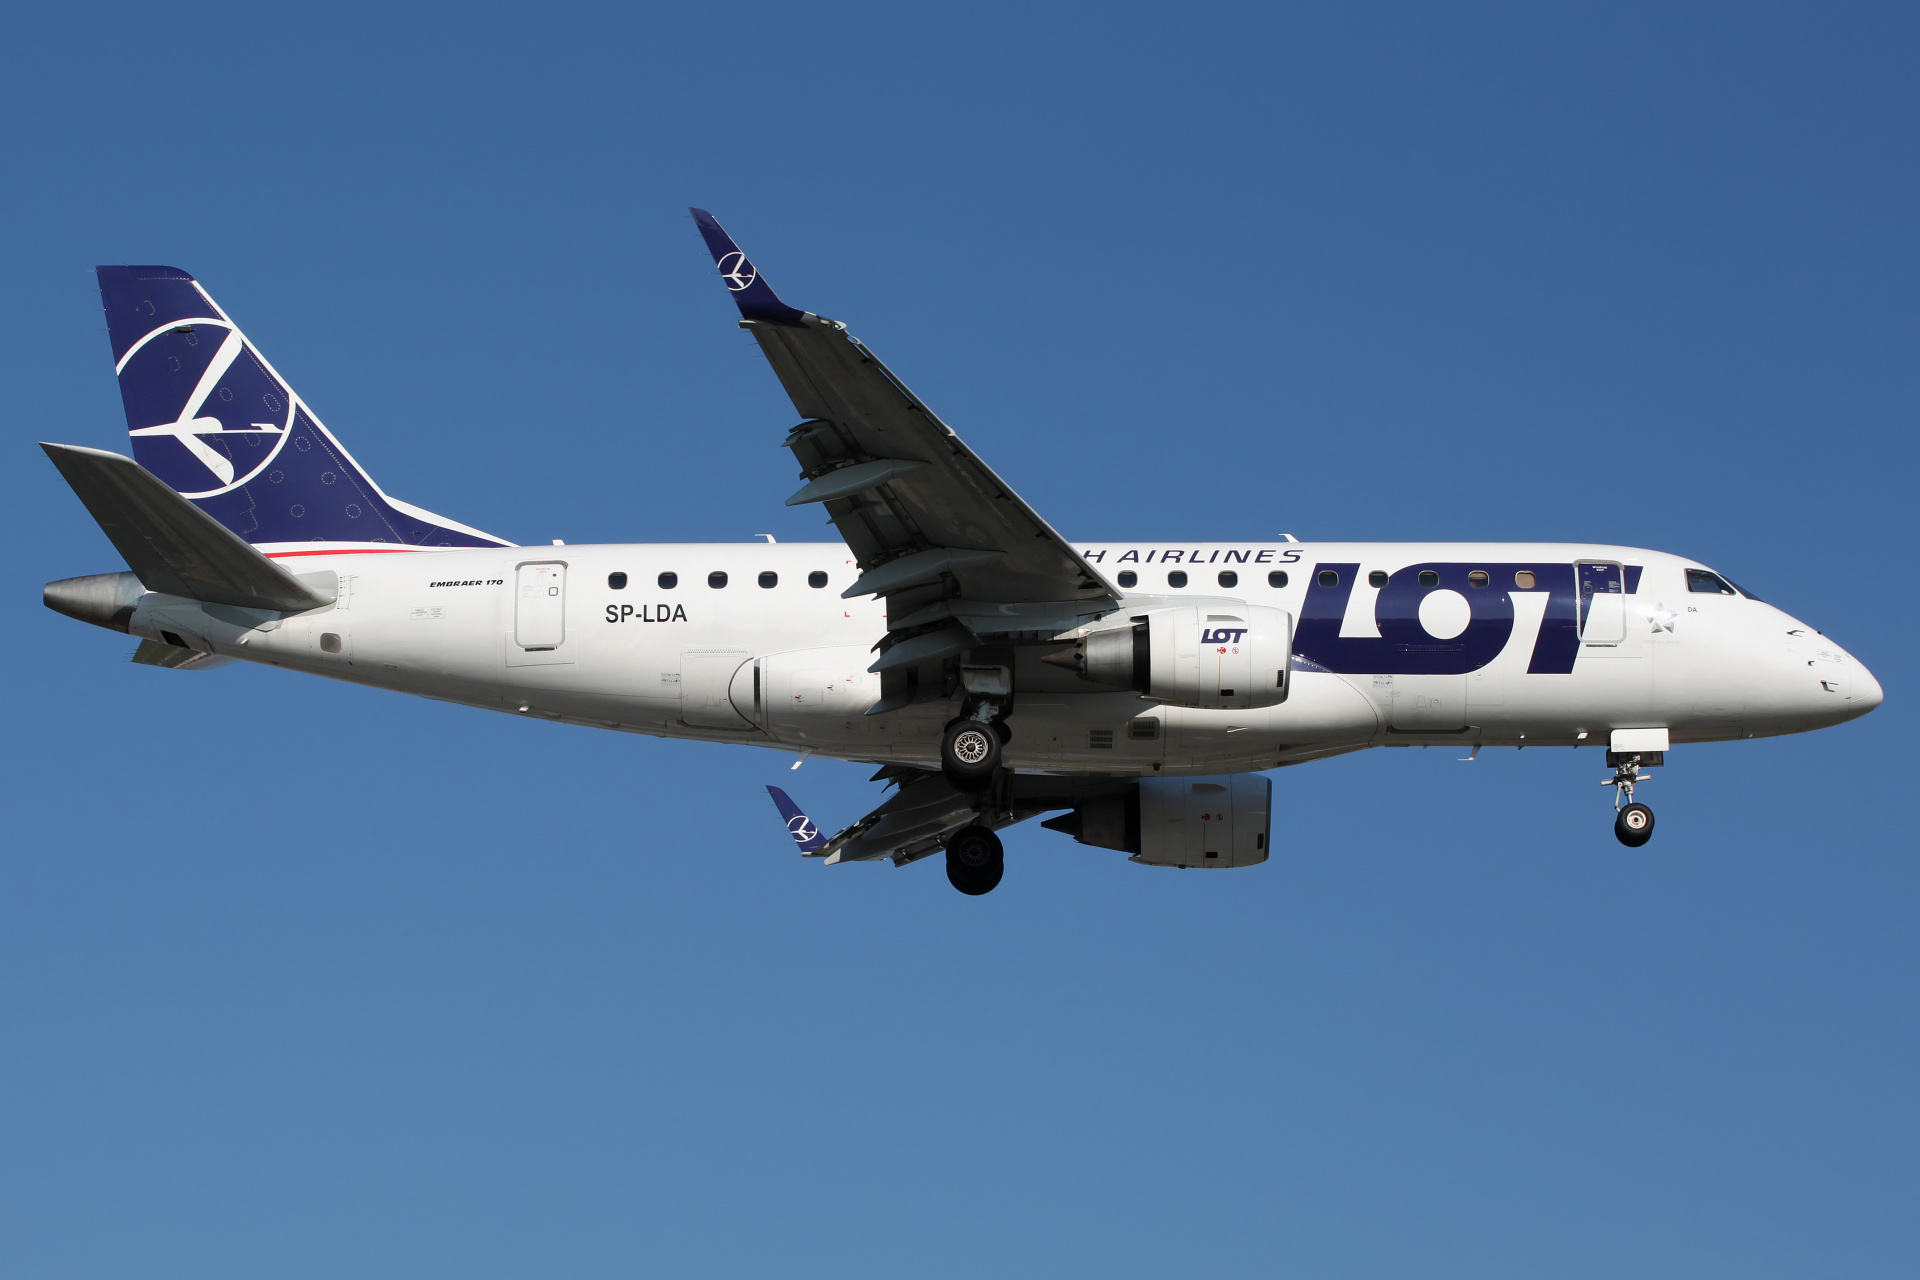 SP-LDA (new livery) (Aircraft » EPWA Spotting » Embraer E170 » LOT Polish Airlines)